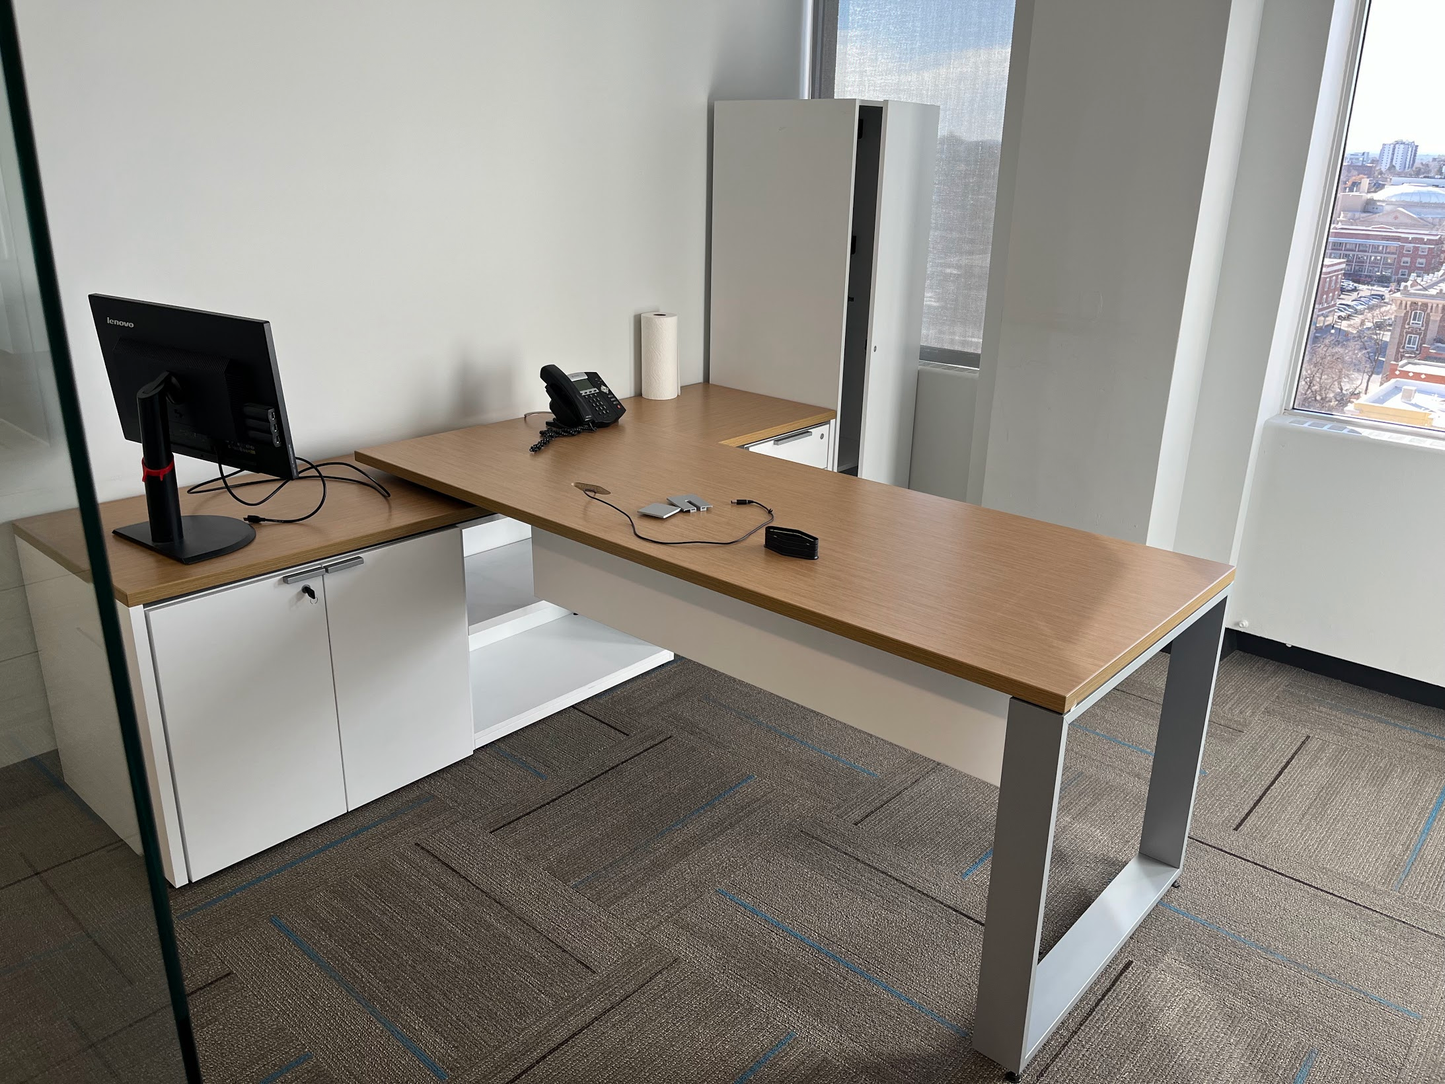 teknion private office furniture in denver